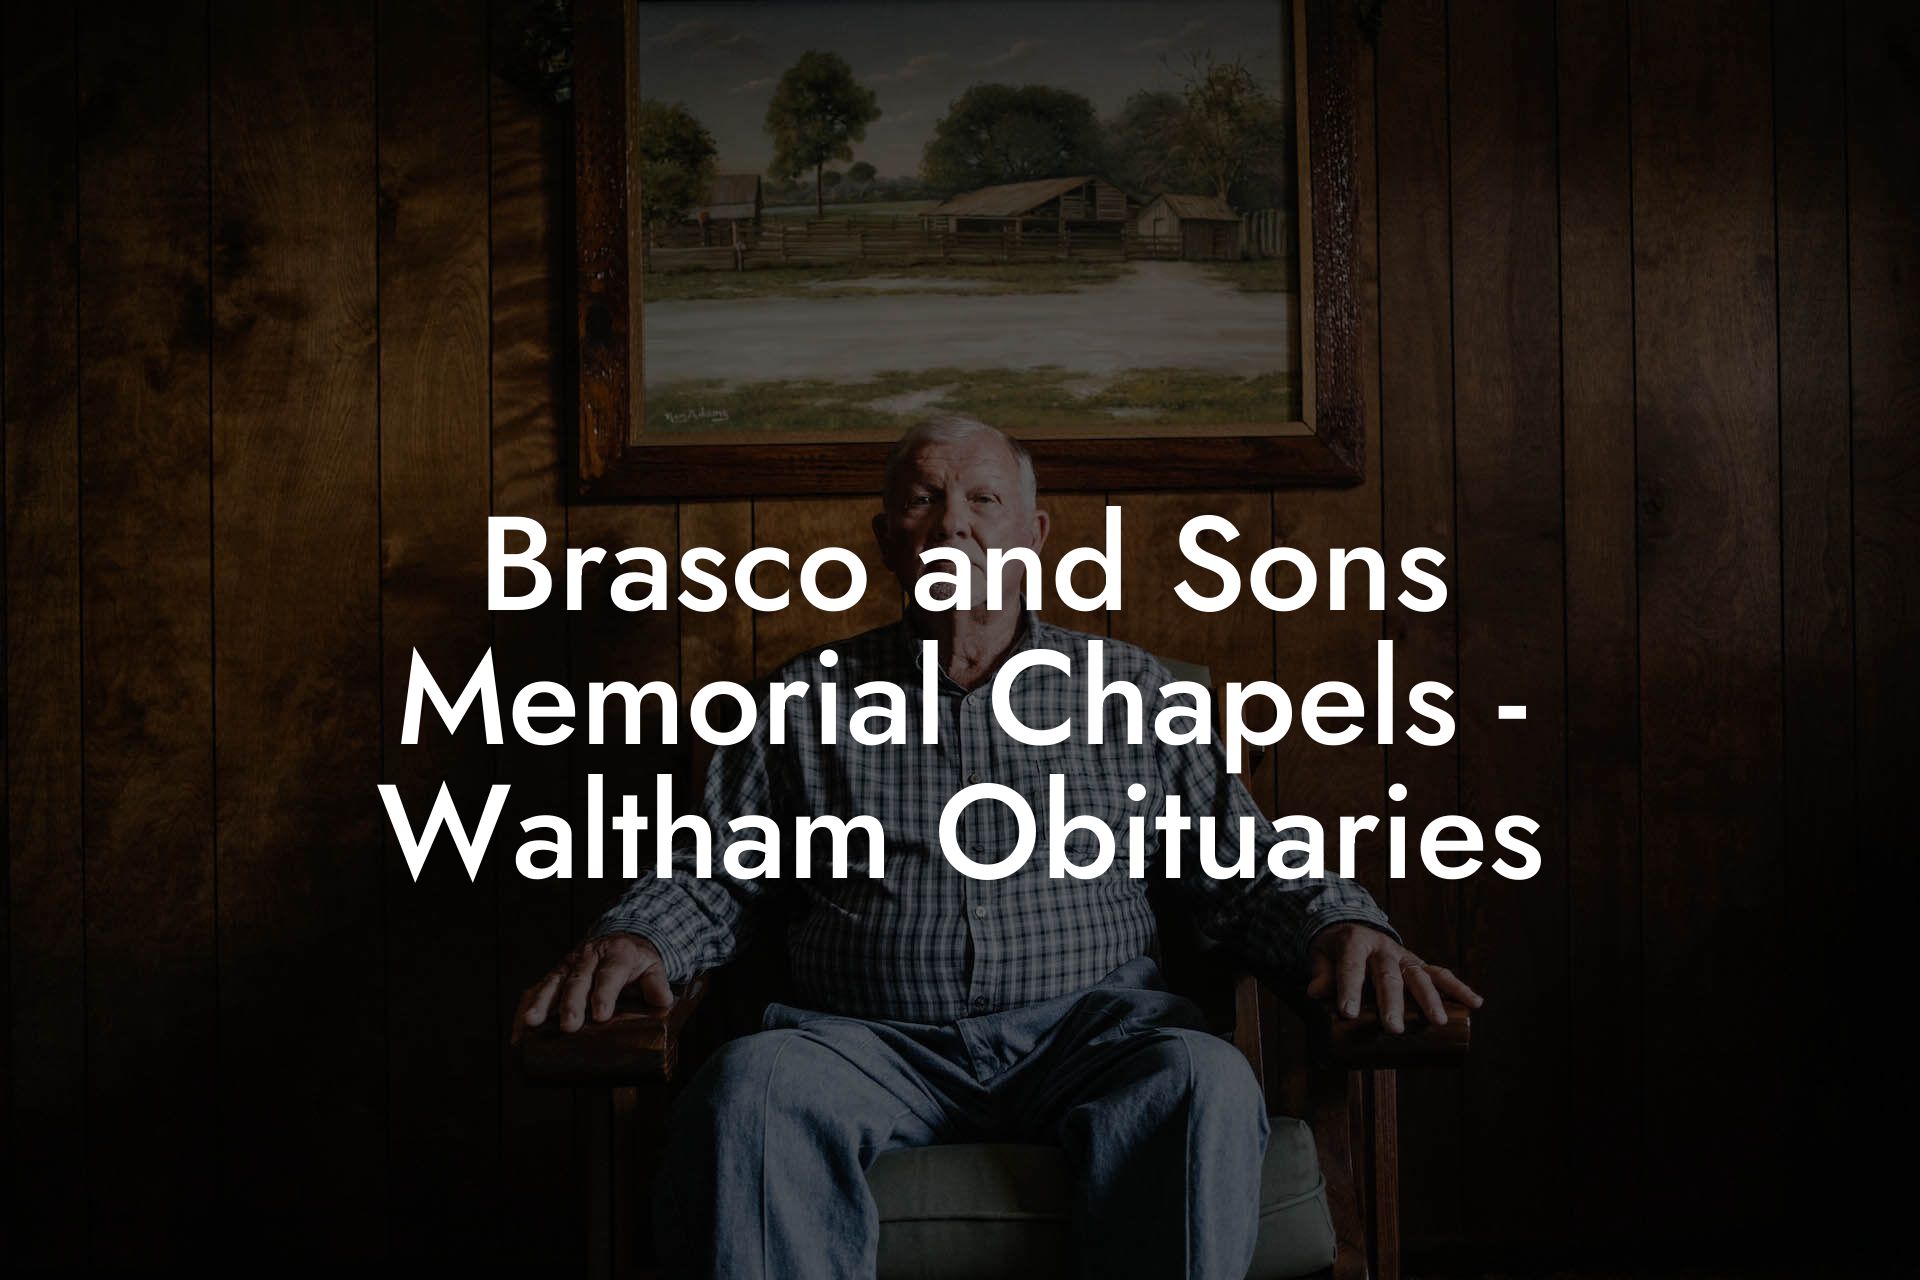 Brasco and Sons Memorial Chapels - Waltham Obituaries